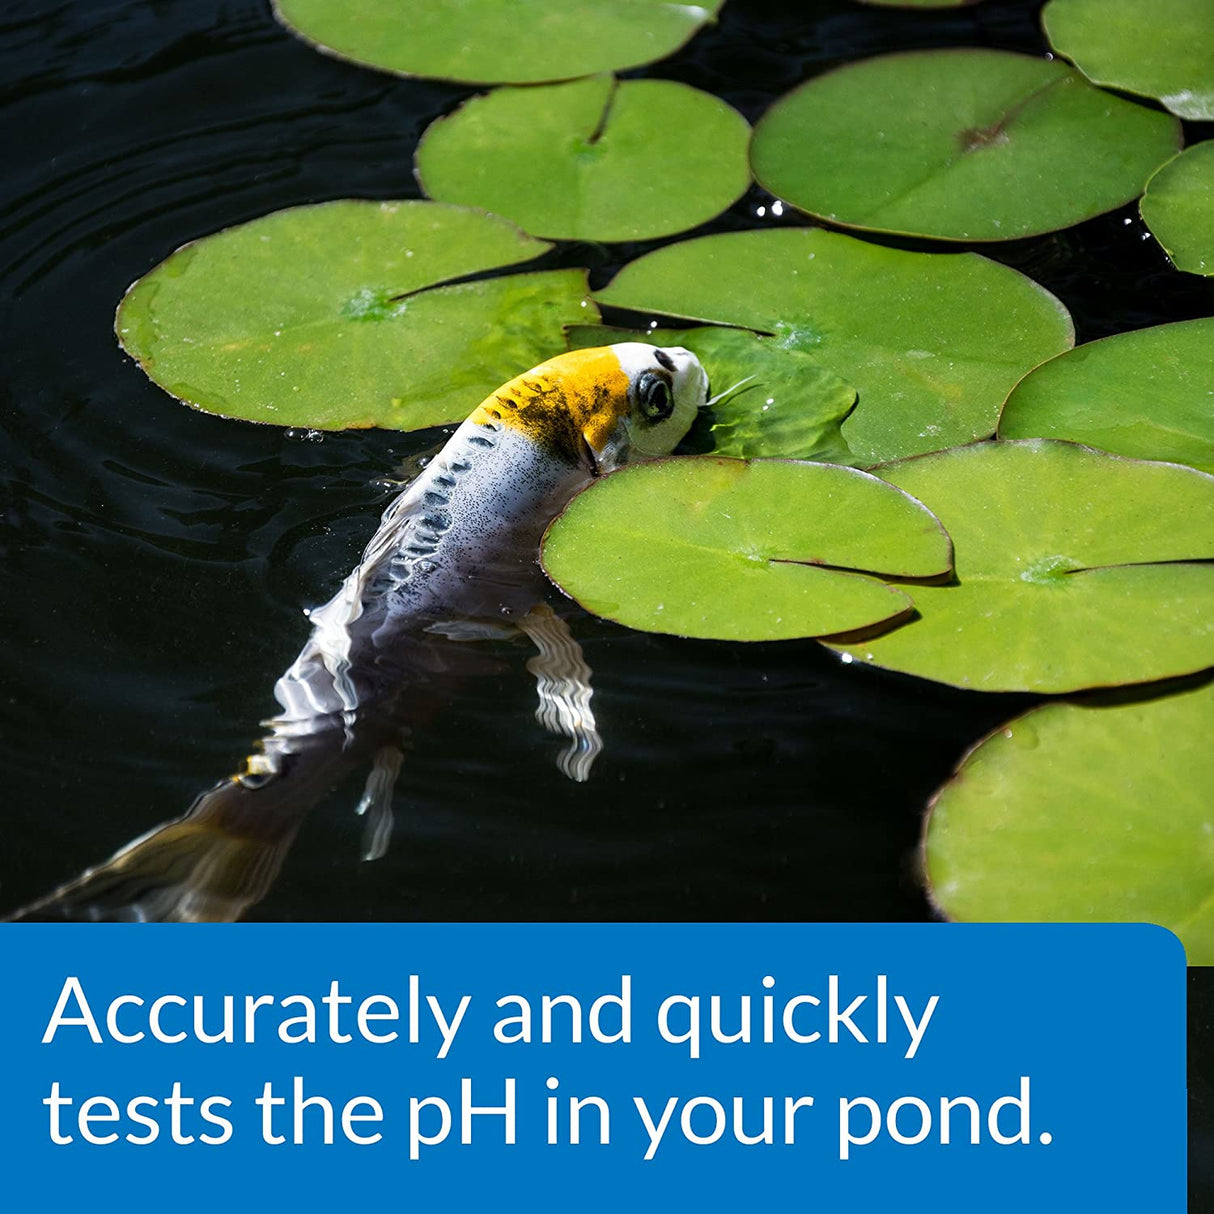 API Pond Wide Range pH Test Kit Reads pH 5.0 to 9.0 - PetMountain.com